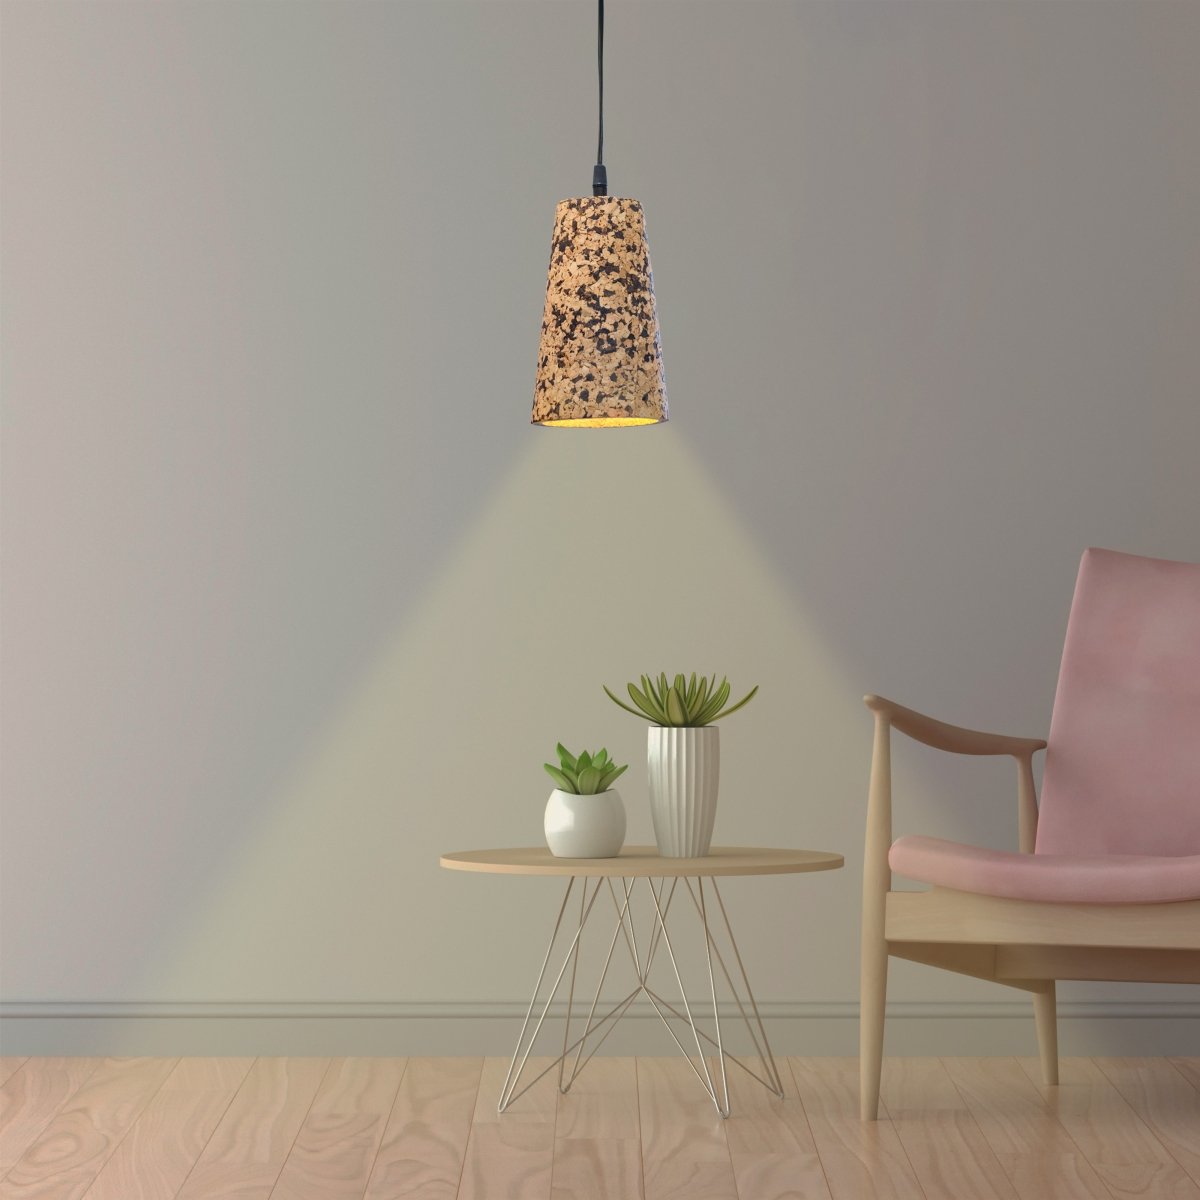 Kezevel Cork Decorative Hanging Light - Natural Cork Brown Conical Pendant Light for Living Room, Balcony, Foyer and Bedroom